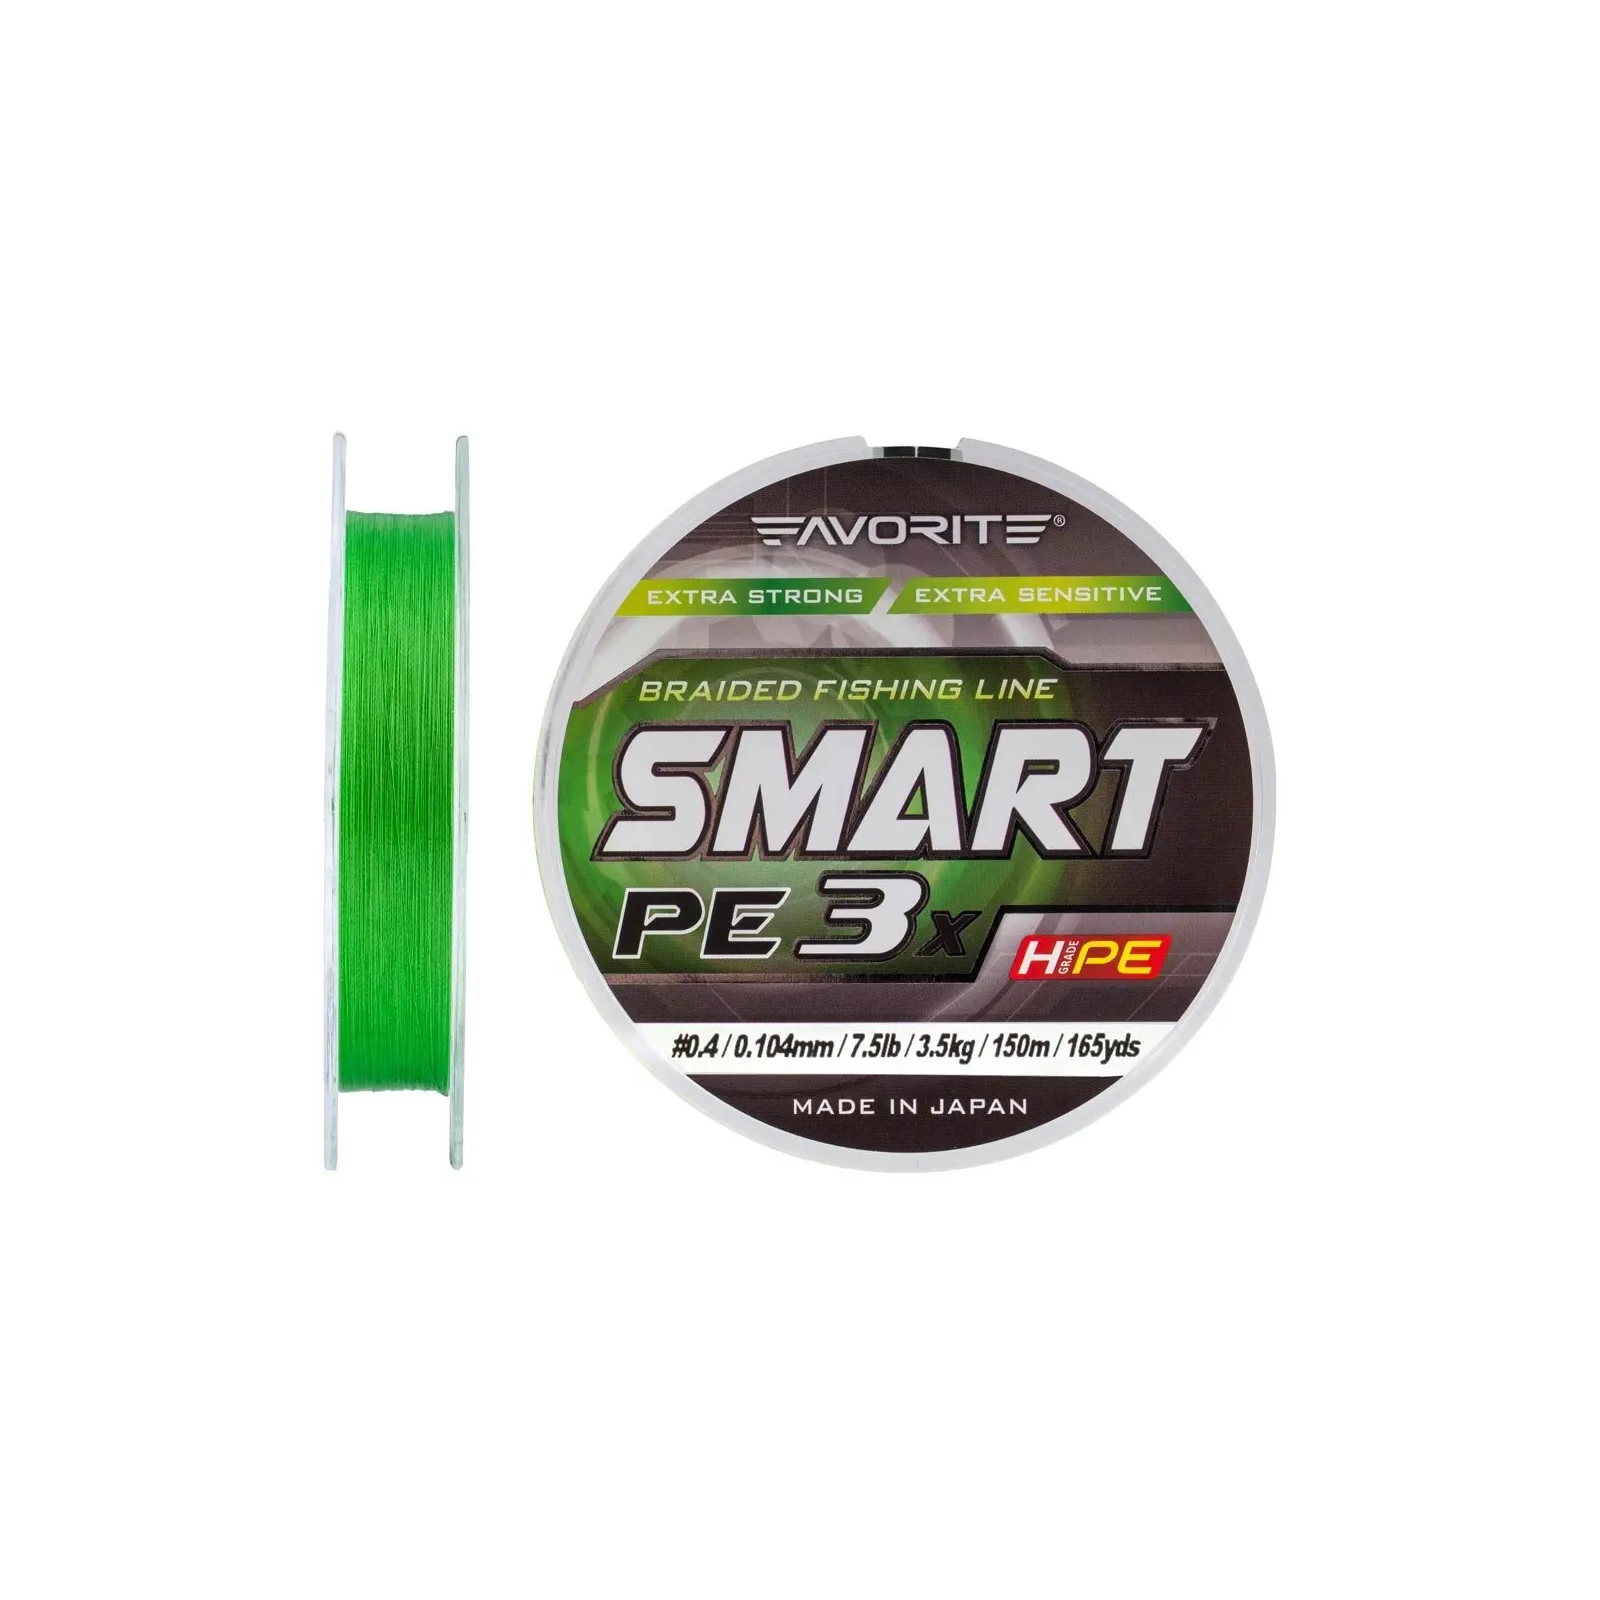 Шнур Favorite Smart PE 3x 150м 0.4/0.104mm 7.5lb/3.5kg Light Green (1693.10.64) изображение 2